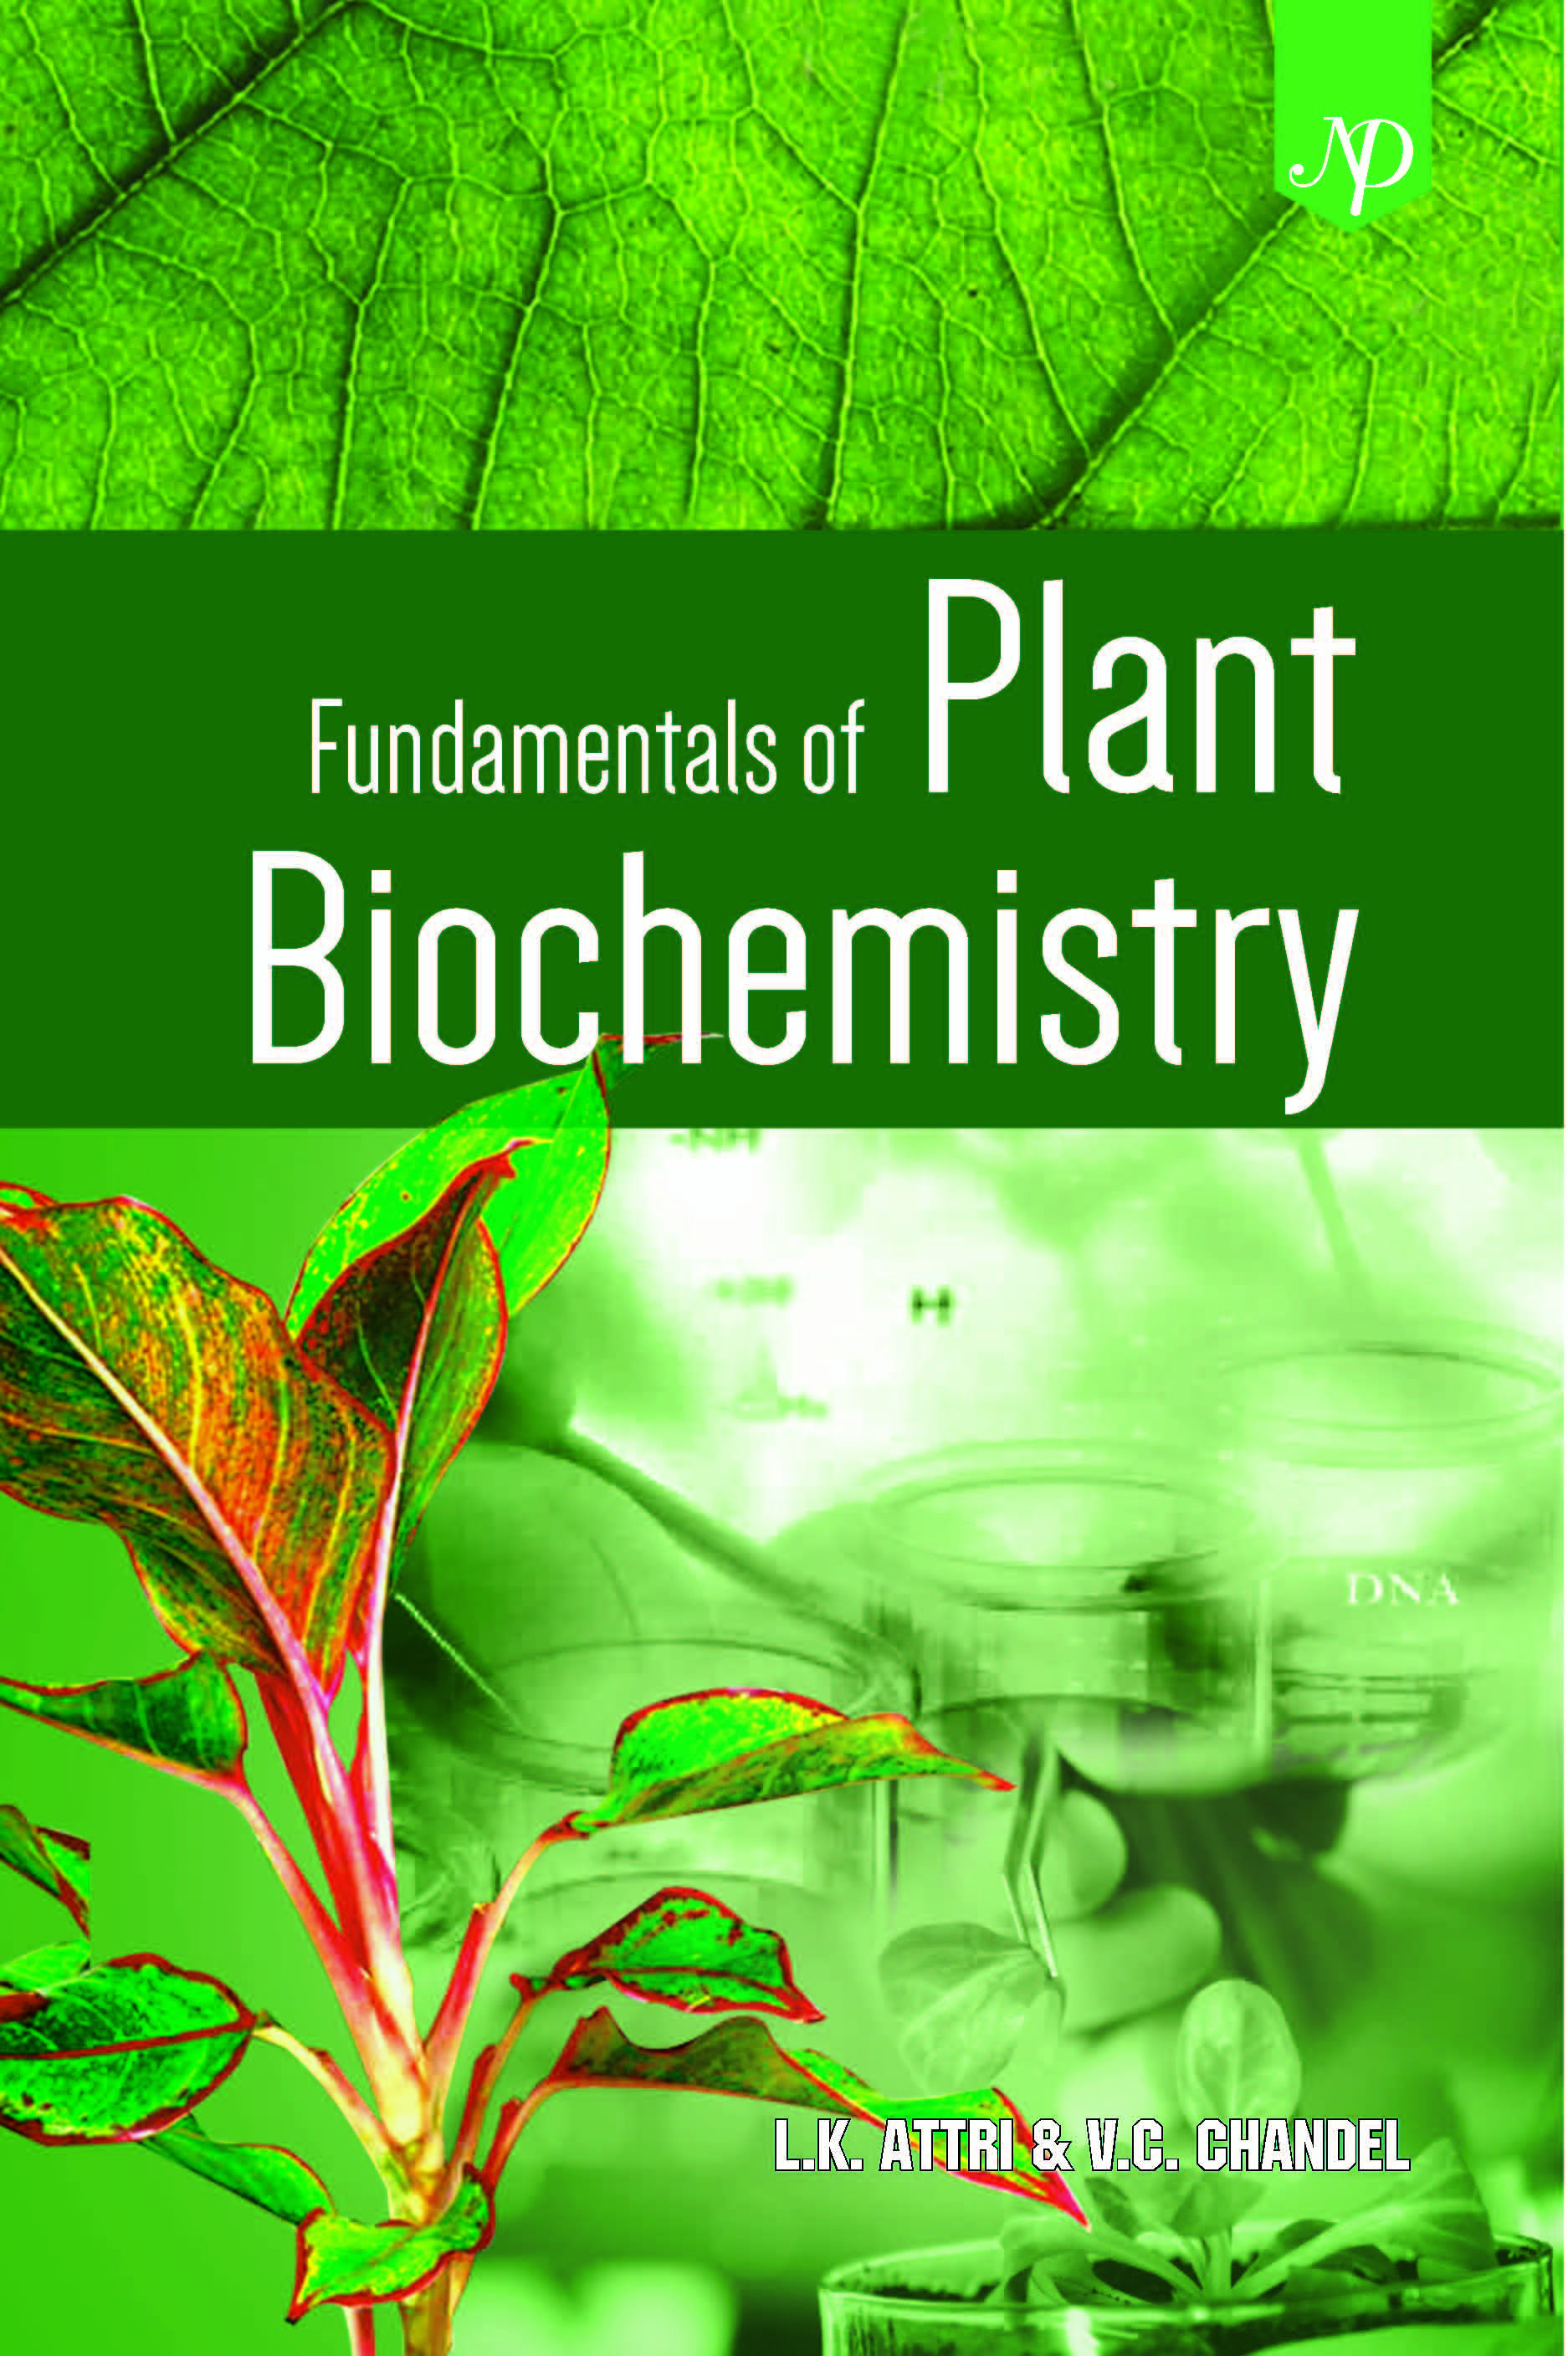 Fundamentals of Plant Biochemistry Cover.jpg